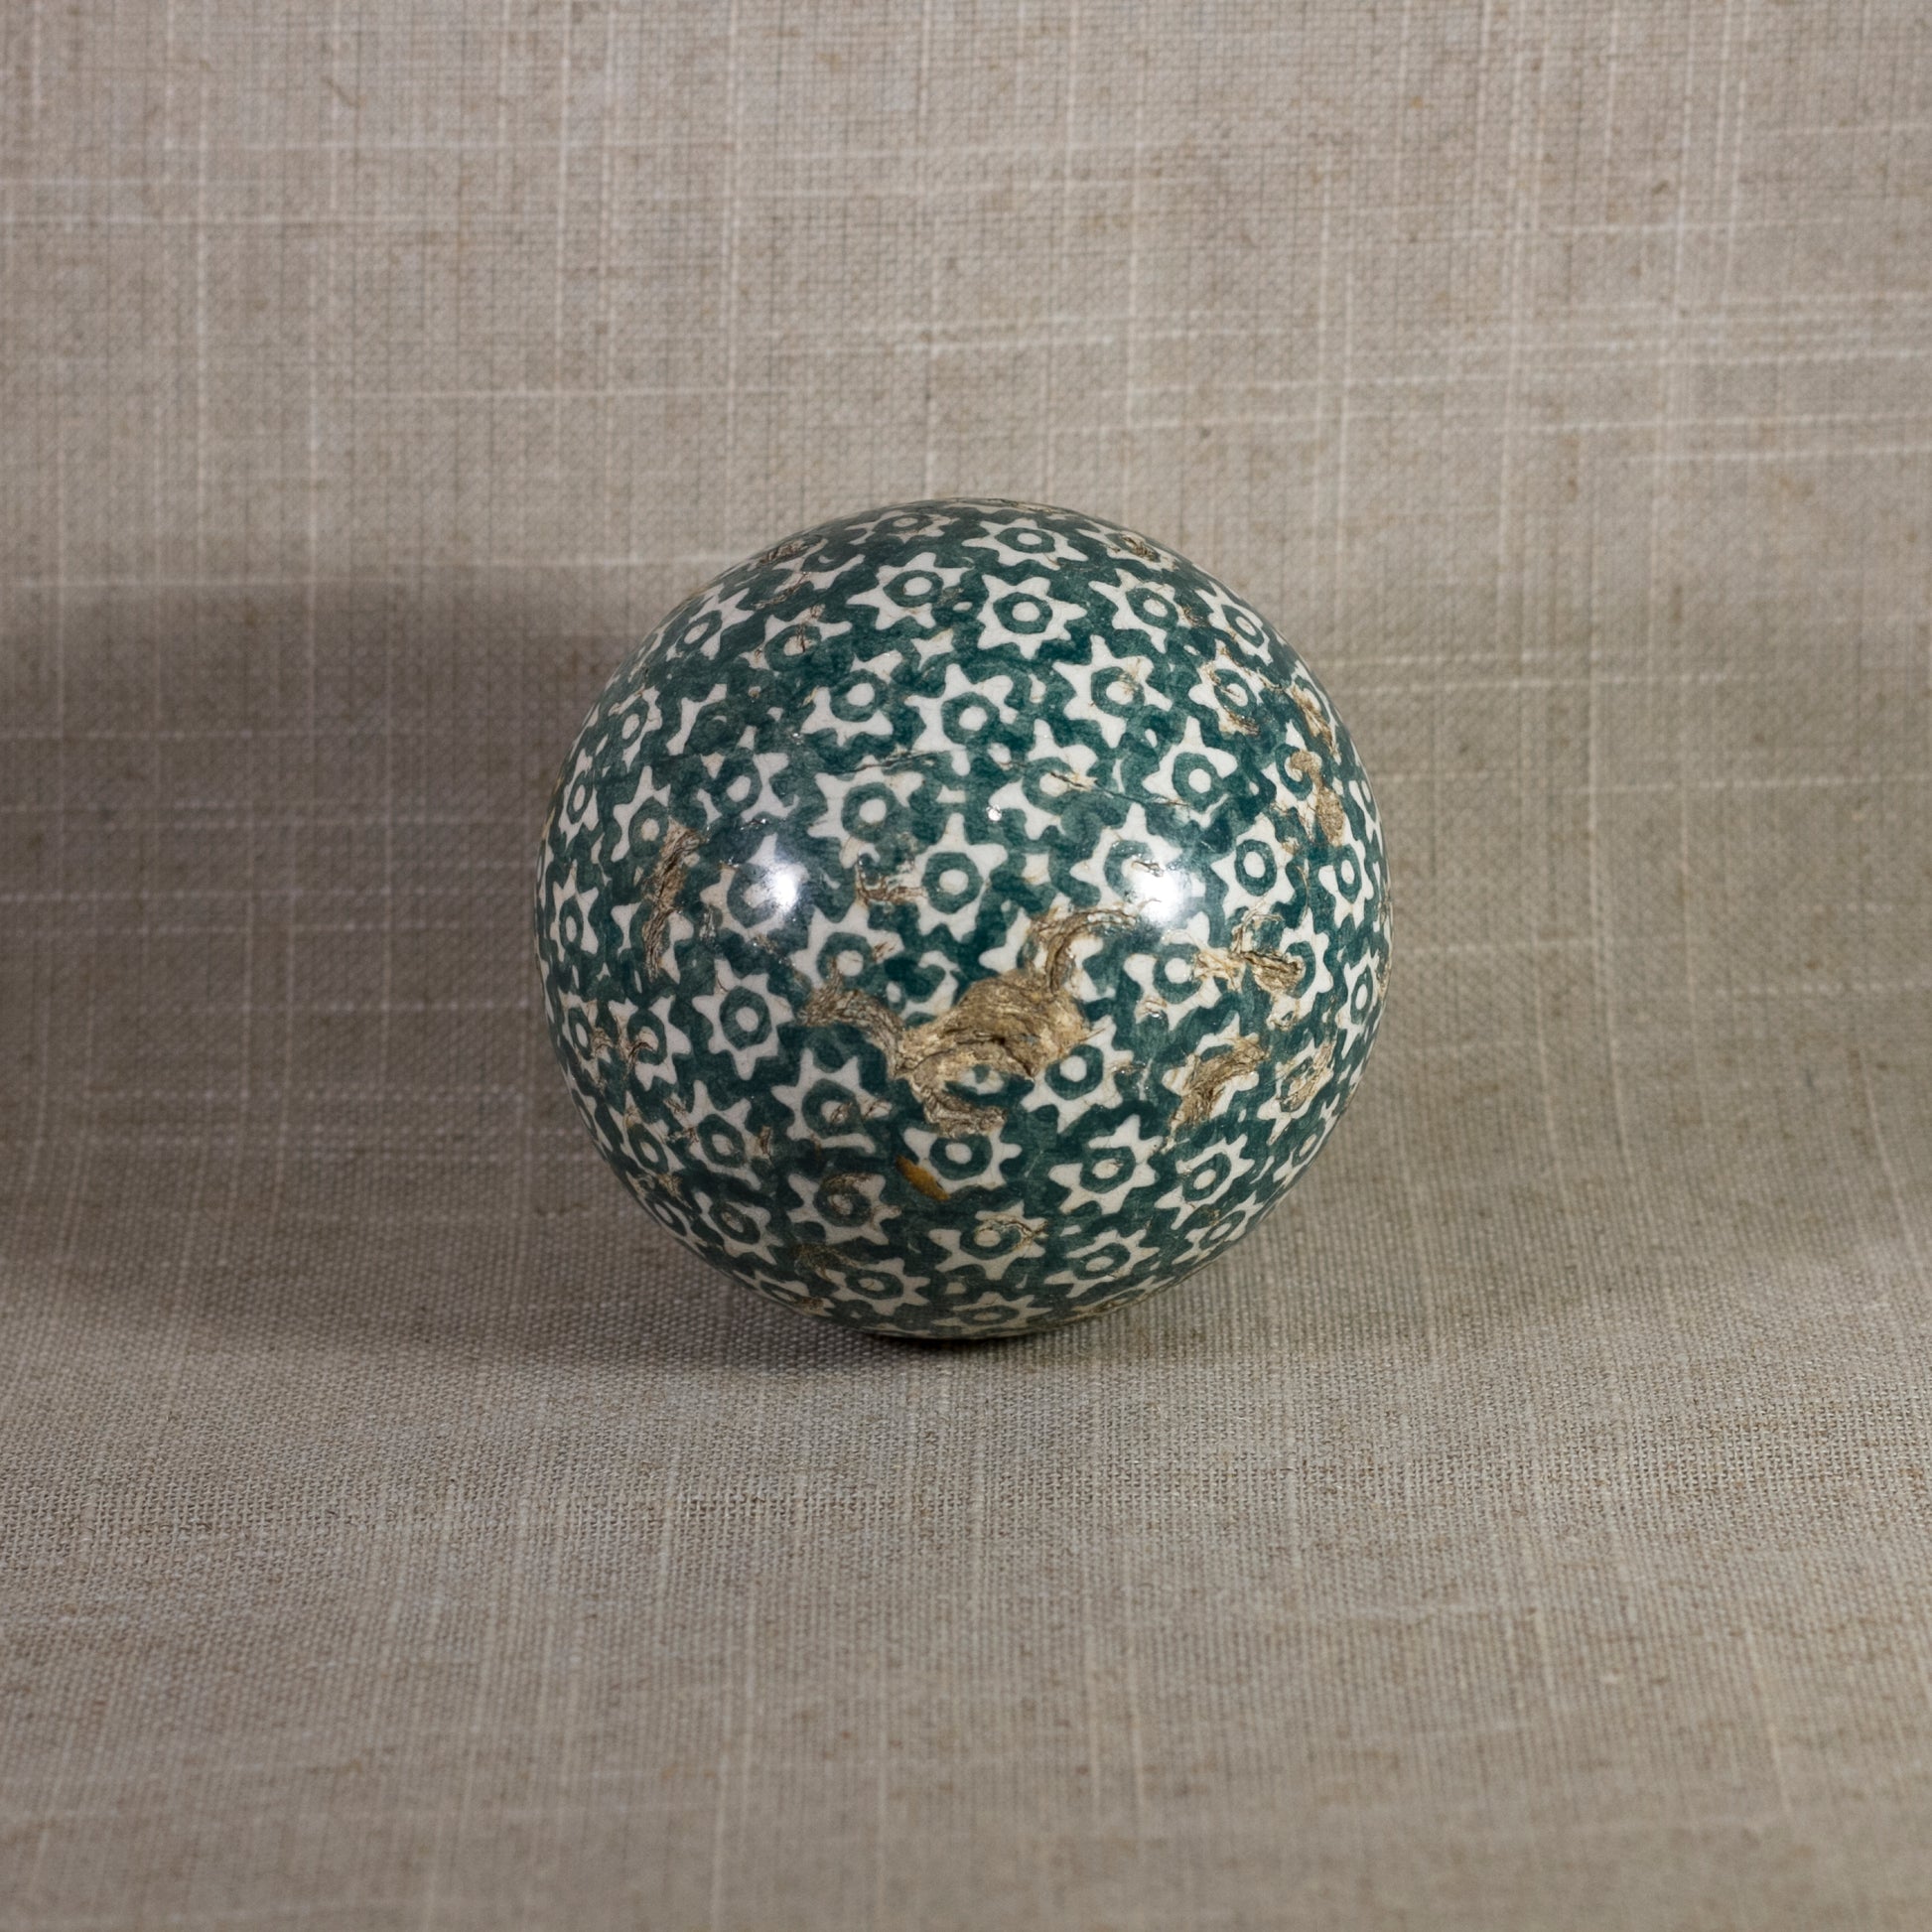 Antique VICTORIAN CARPET BALL with Green Glaze Stick-Spatter Star Design 3” Circa 1860 - 1890